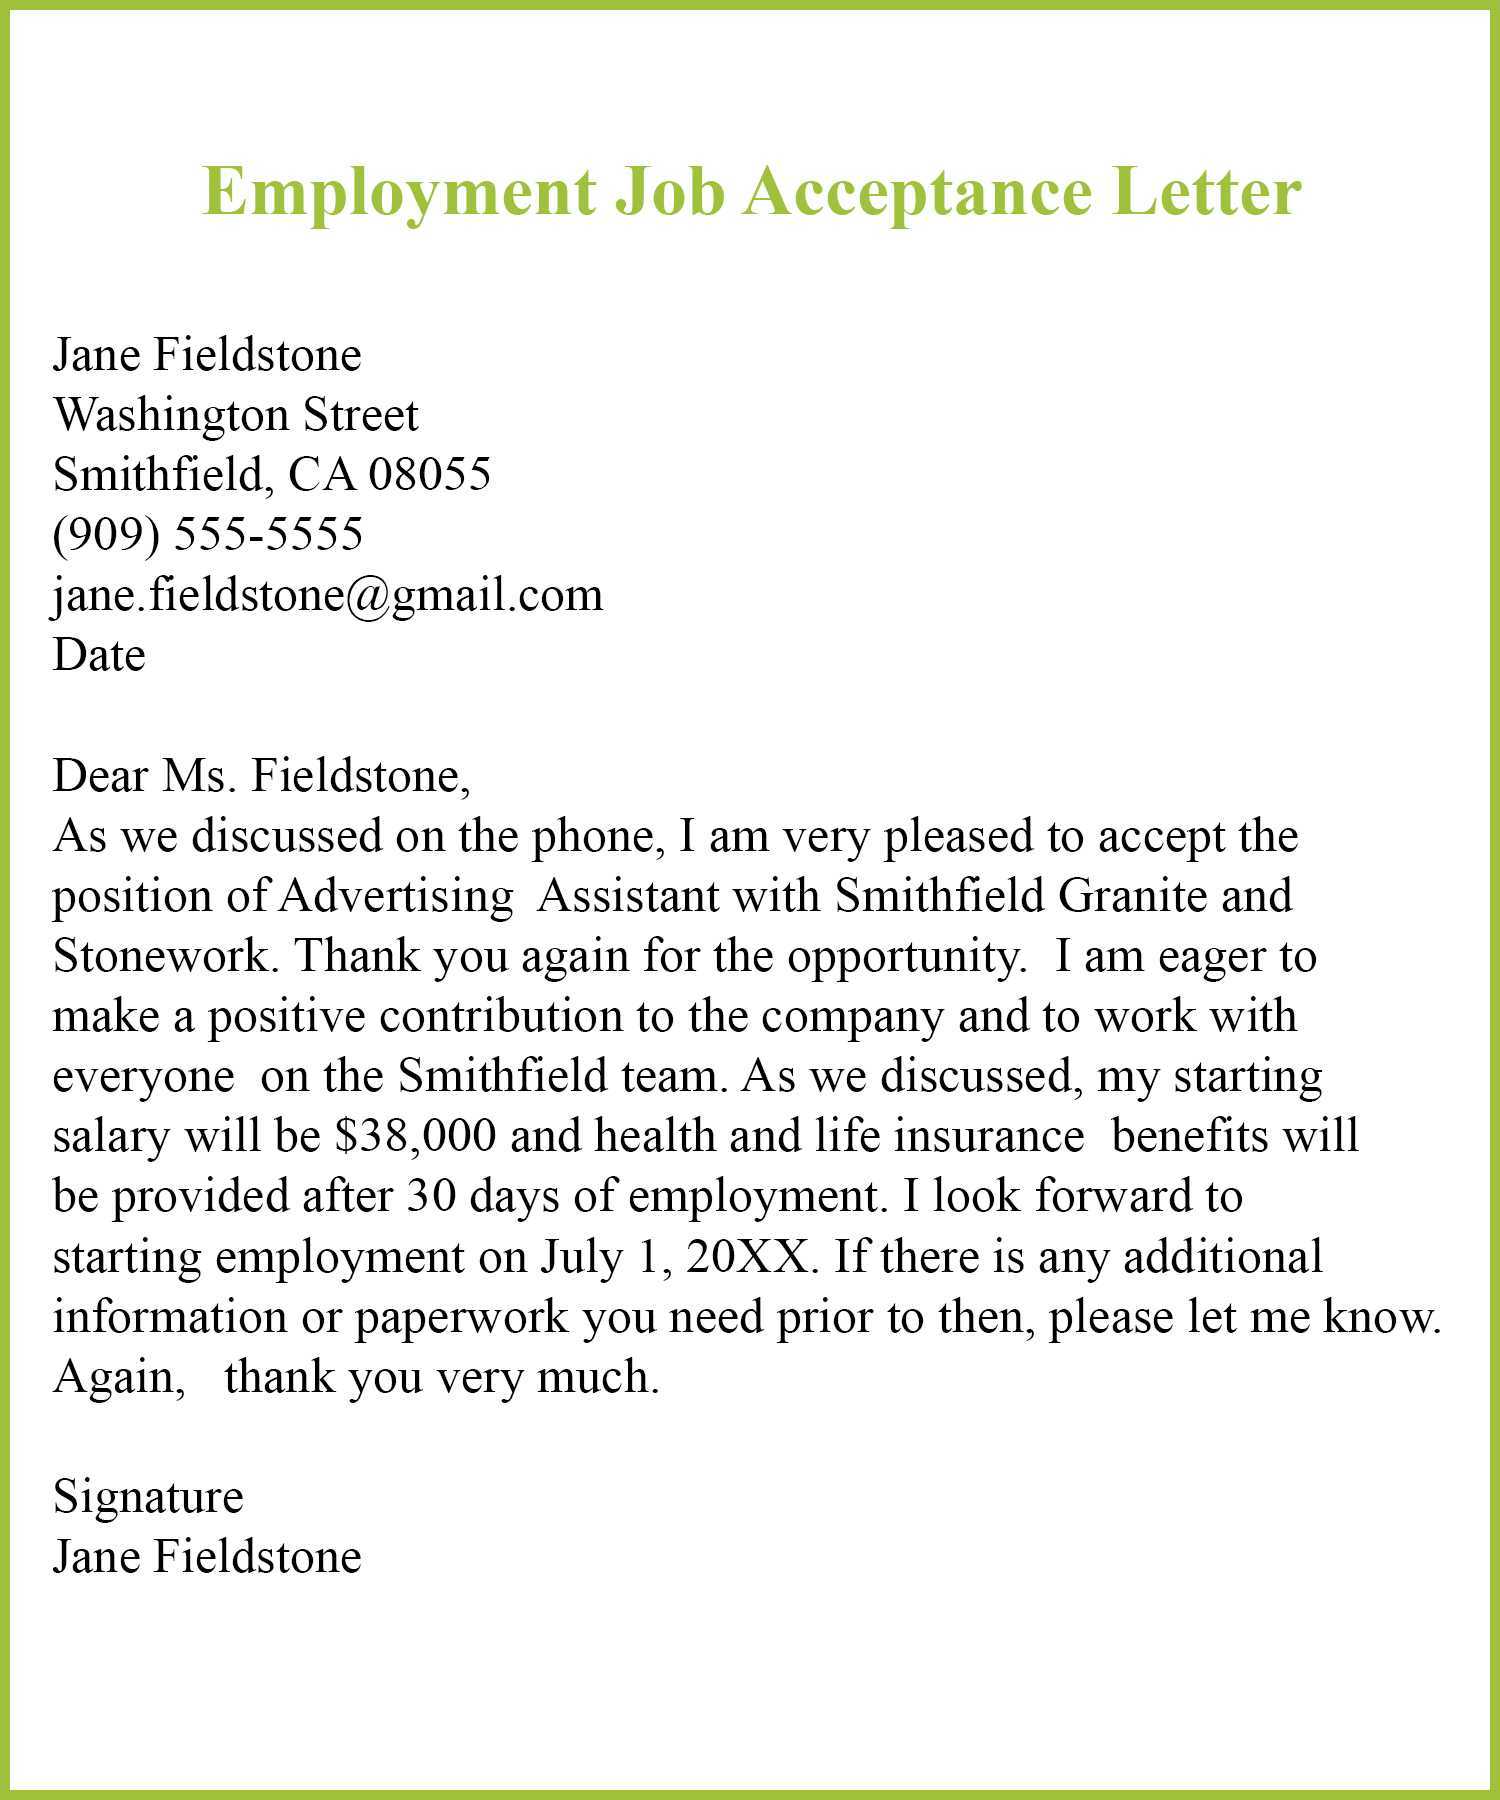 020 Employment Job Acceptance Template Ideas Letter Regarding Certificate Of Acceptance Template